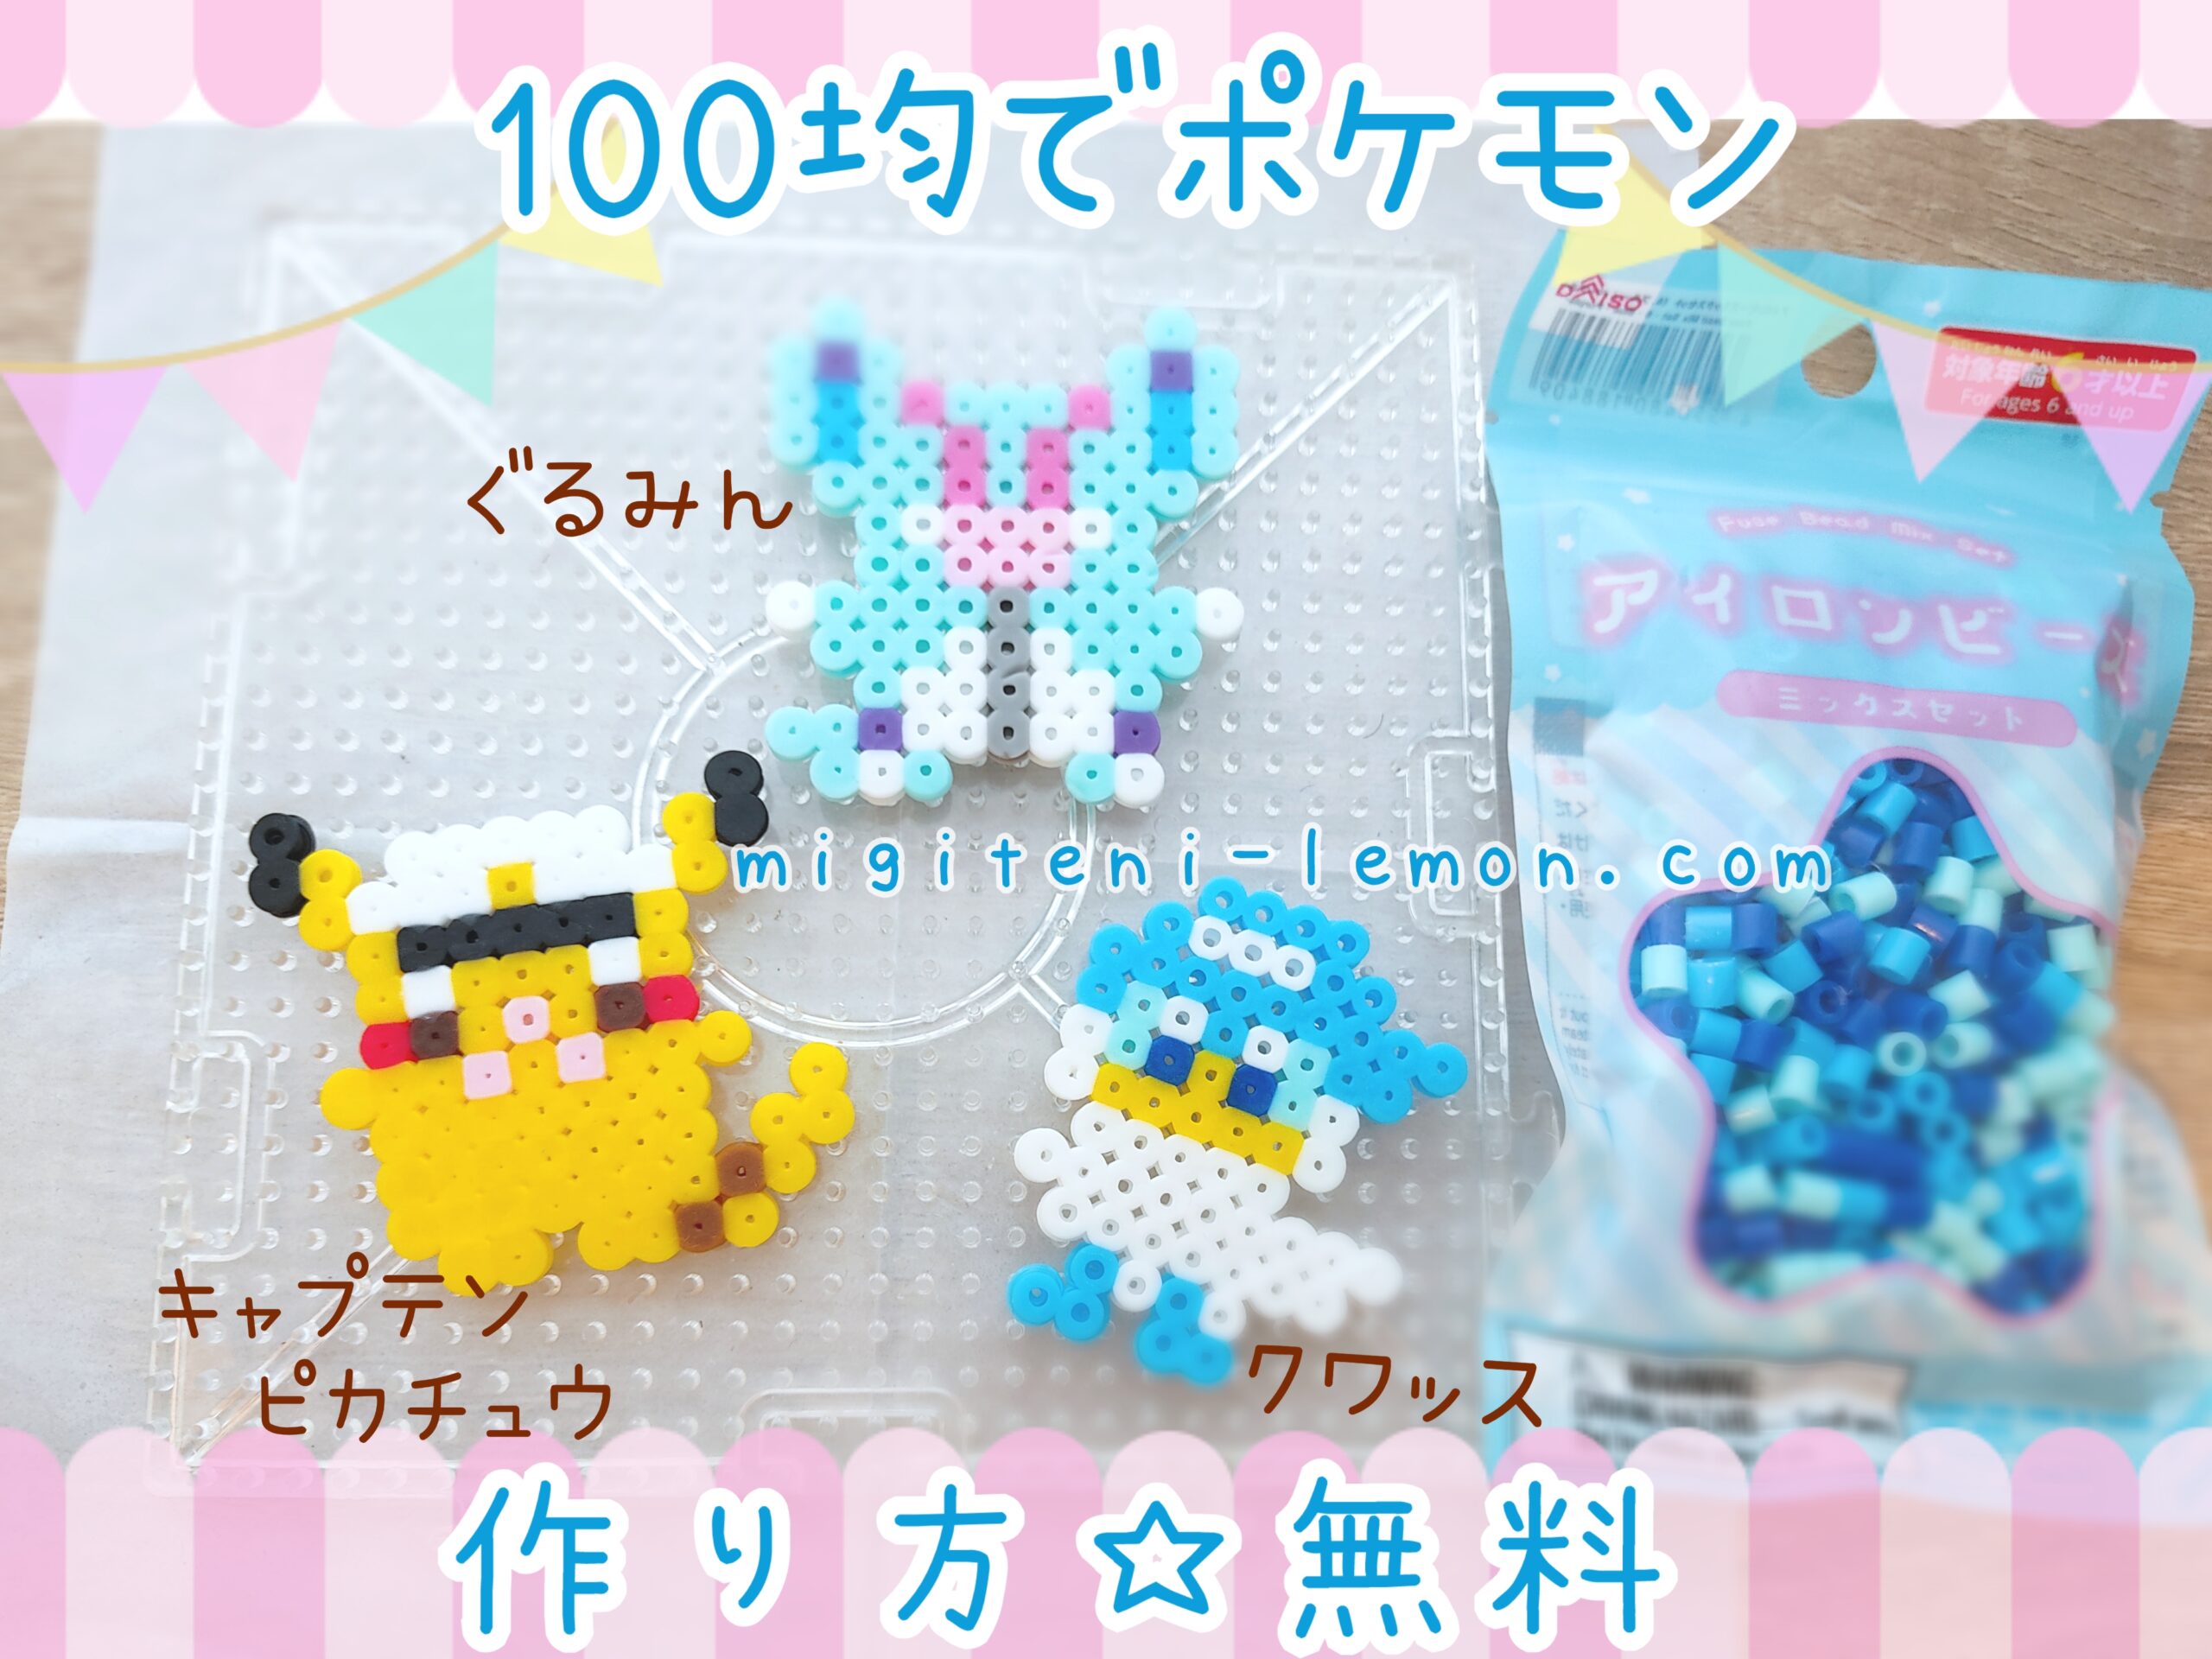 captain-pikachu-gurumin-anime-pokemon-free-beads-zuan